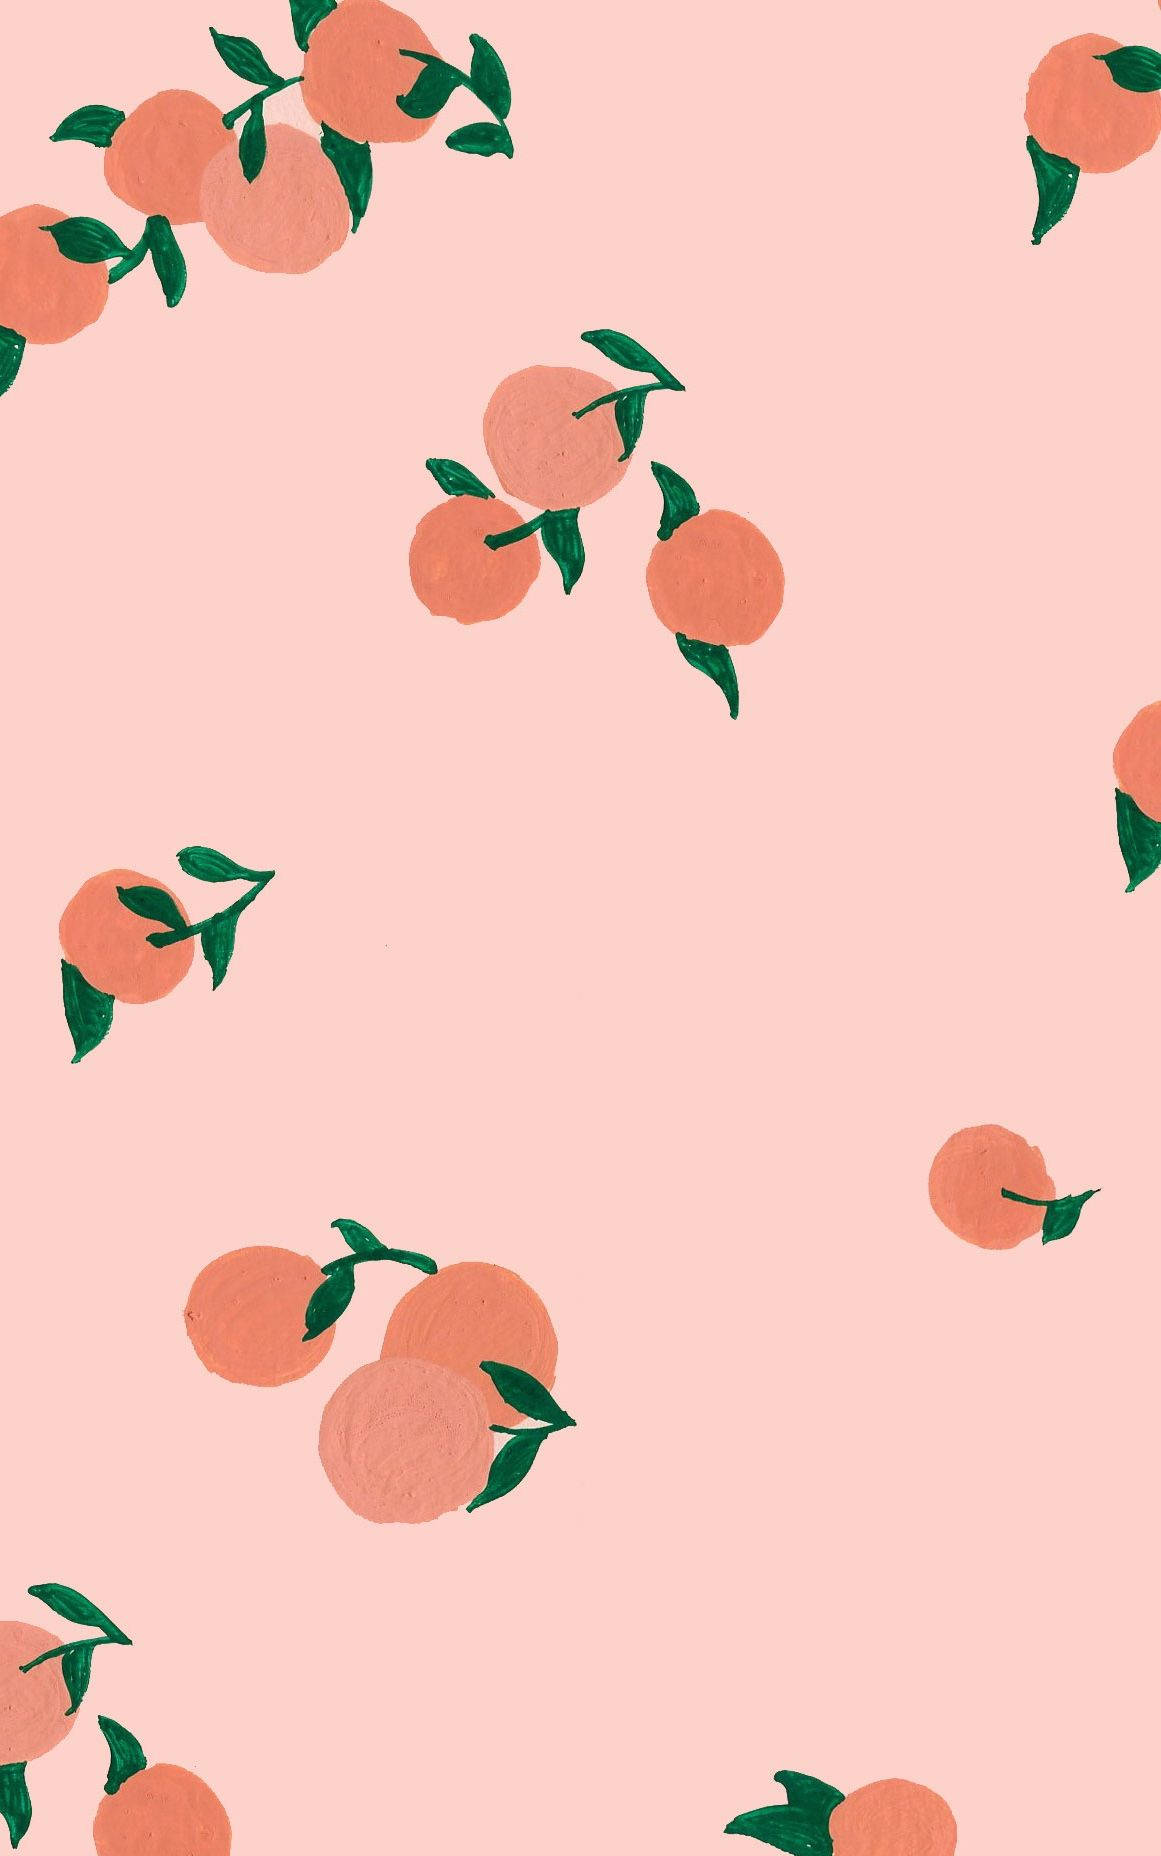 Peach Fruit Digital Art Background